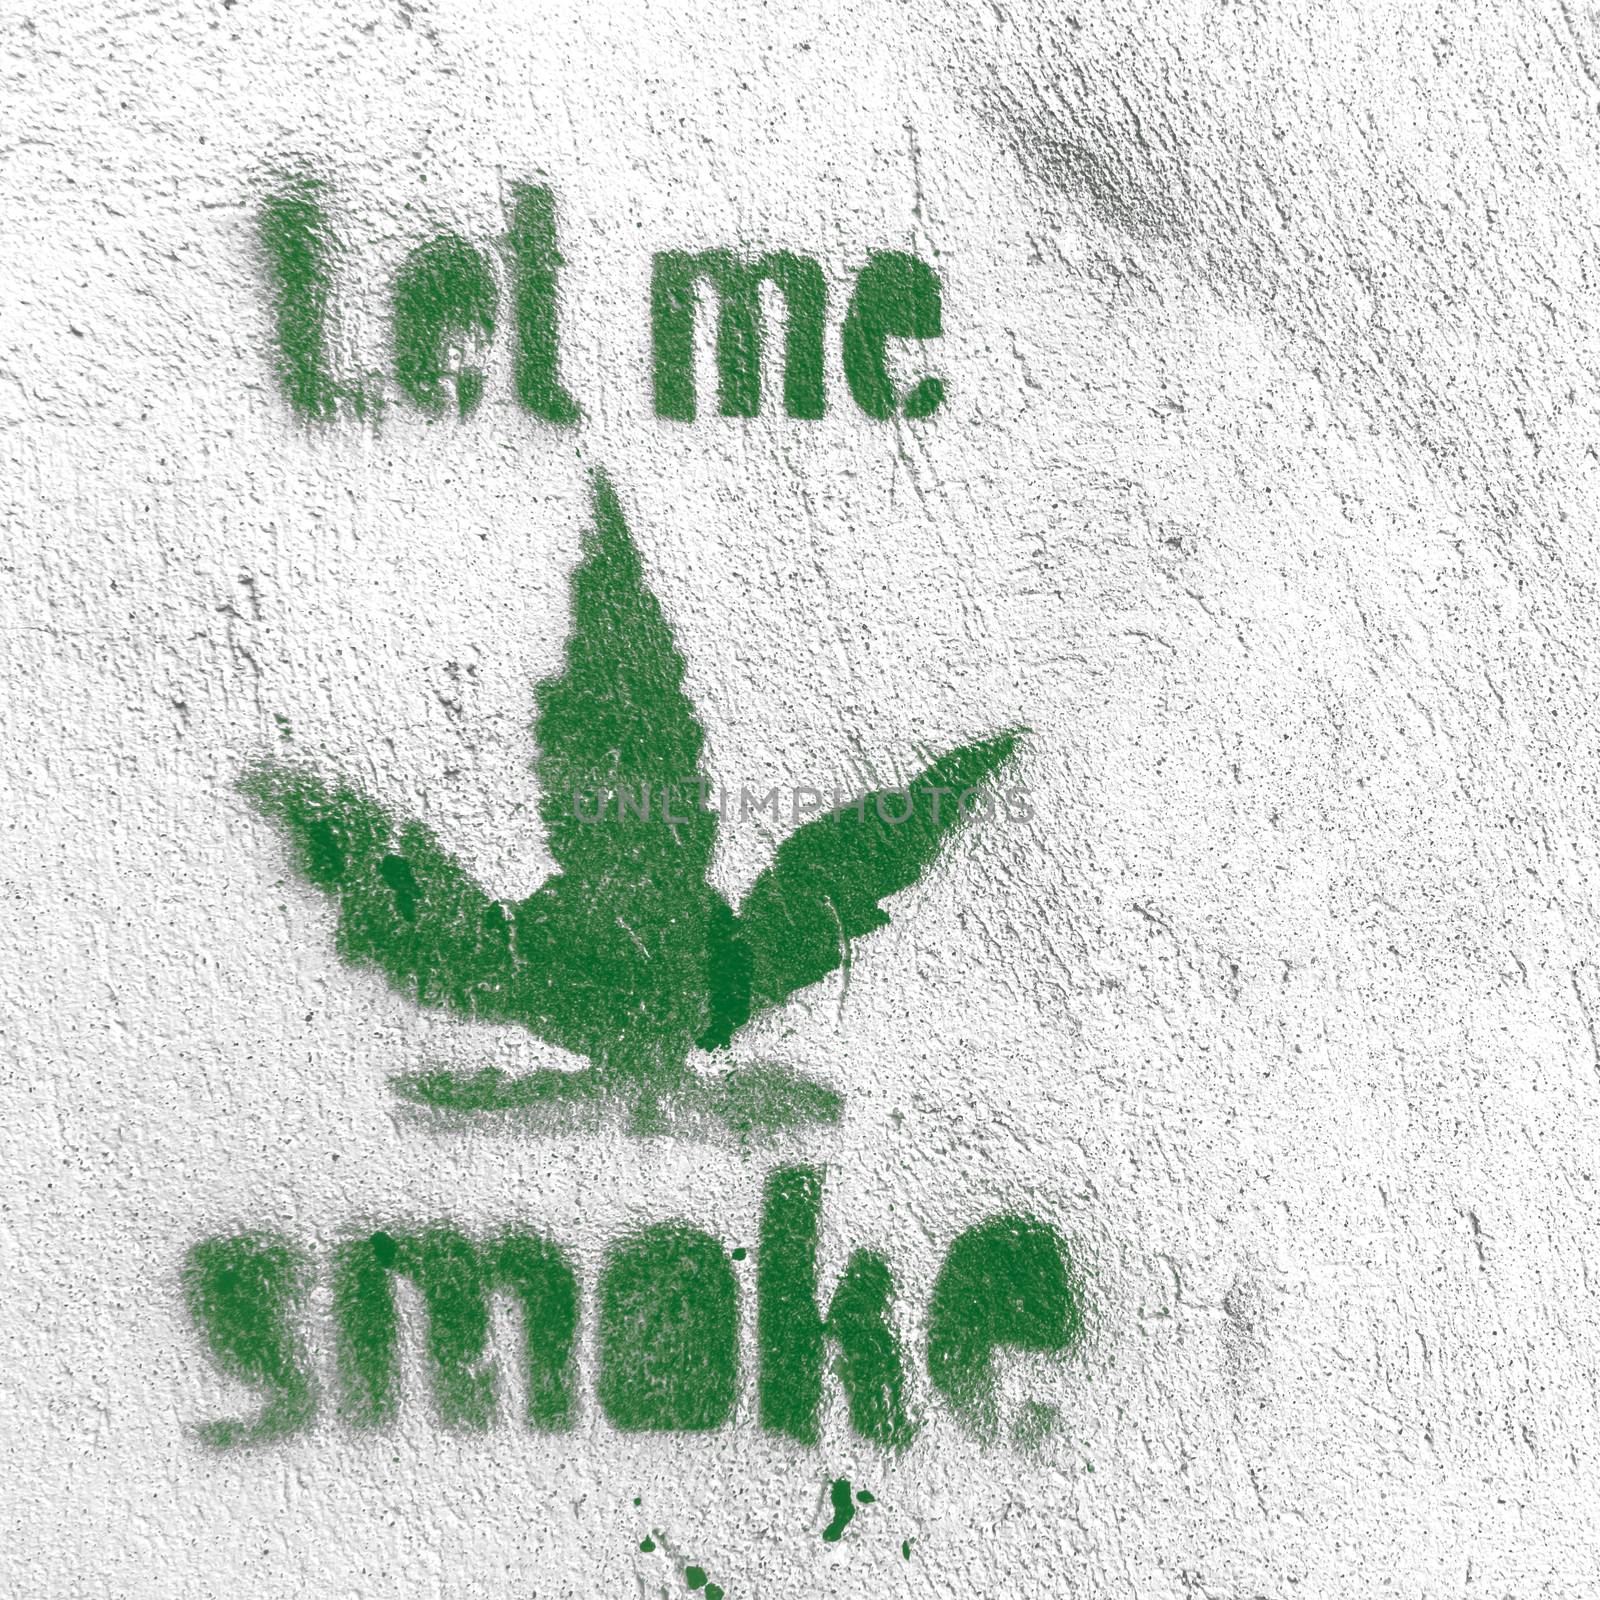 Marijuana leaf symbol on grungy wall with "smoke" message